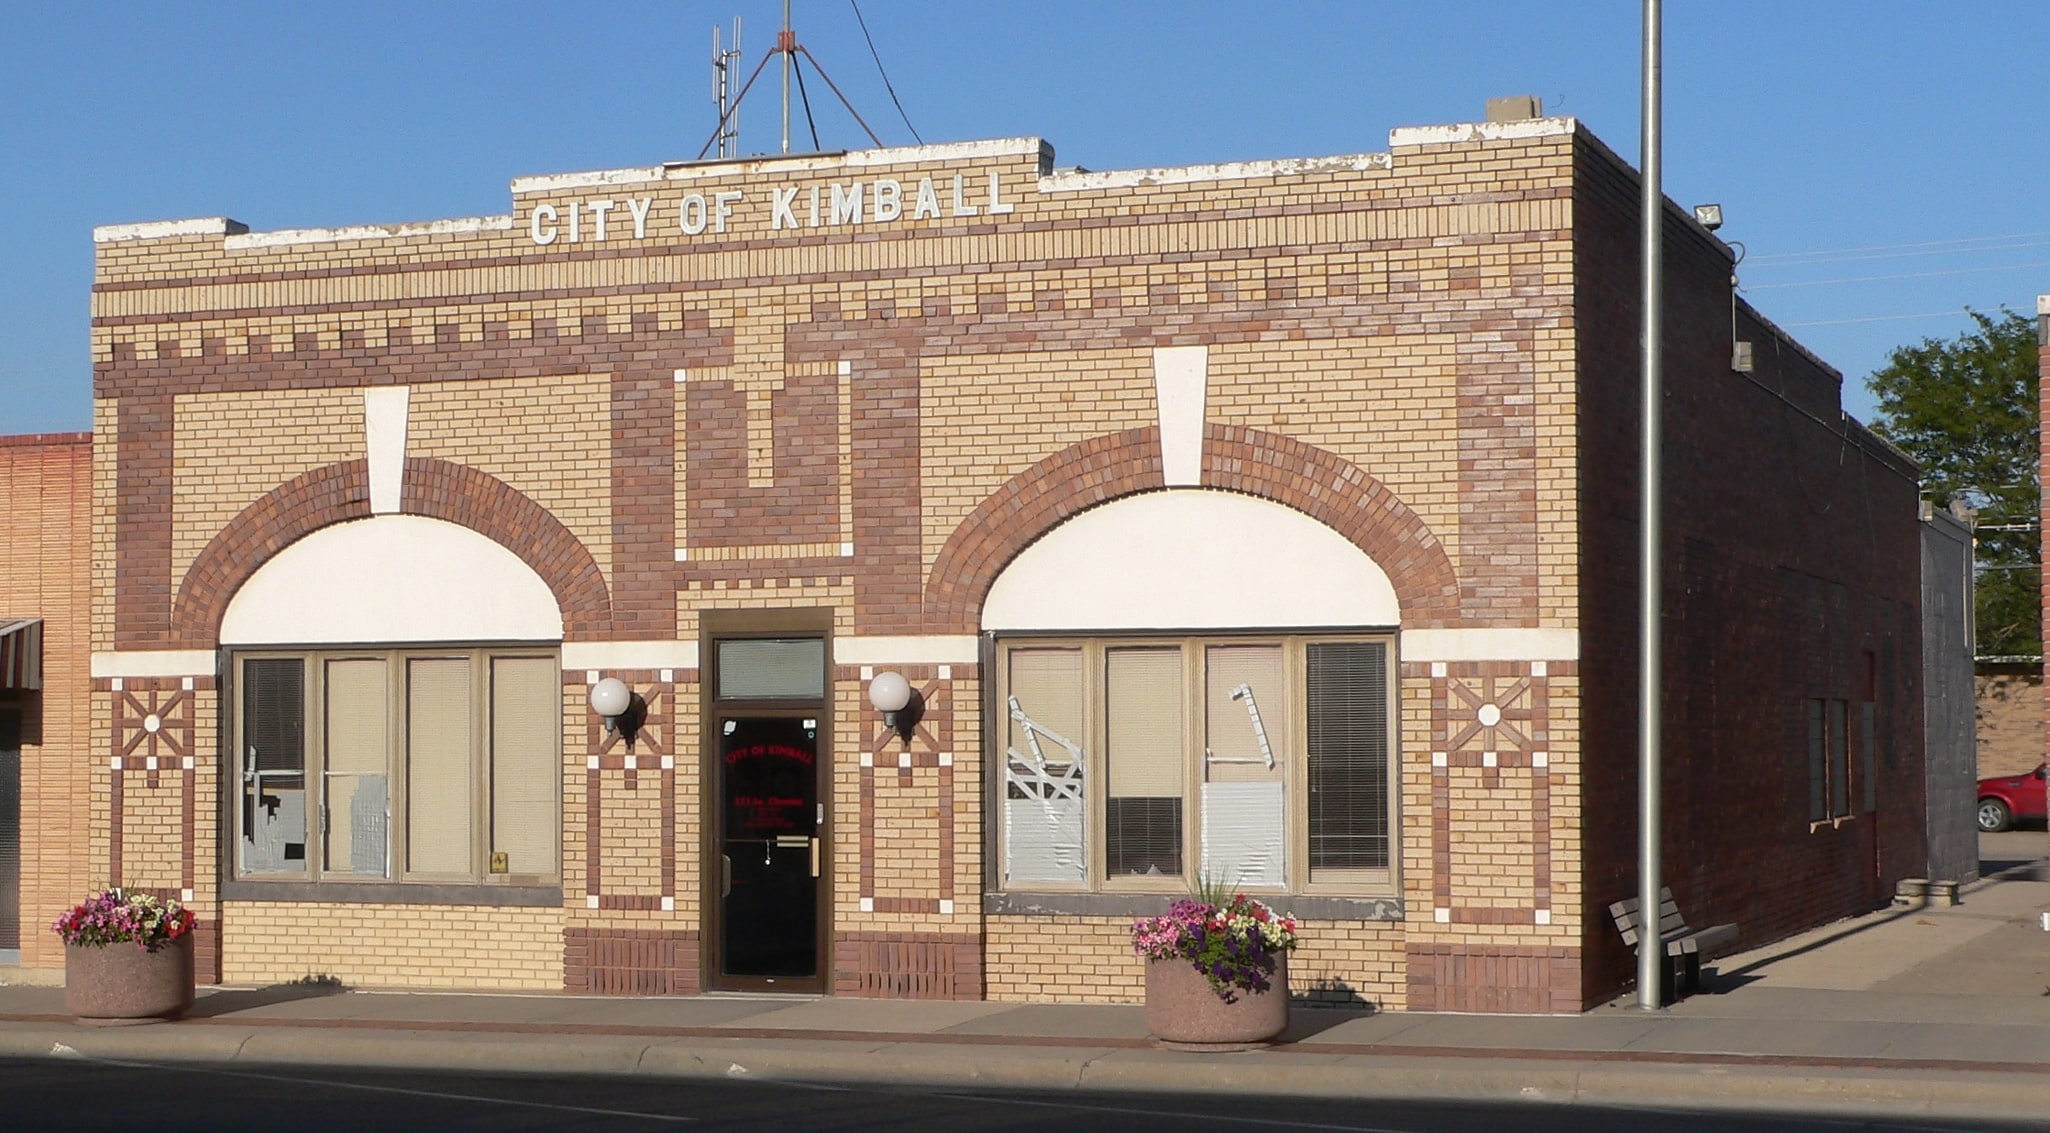 Kimball, Stany Zjednoczone